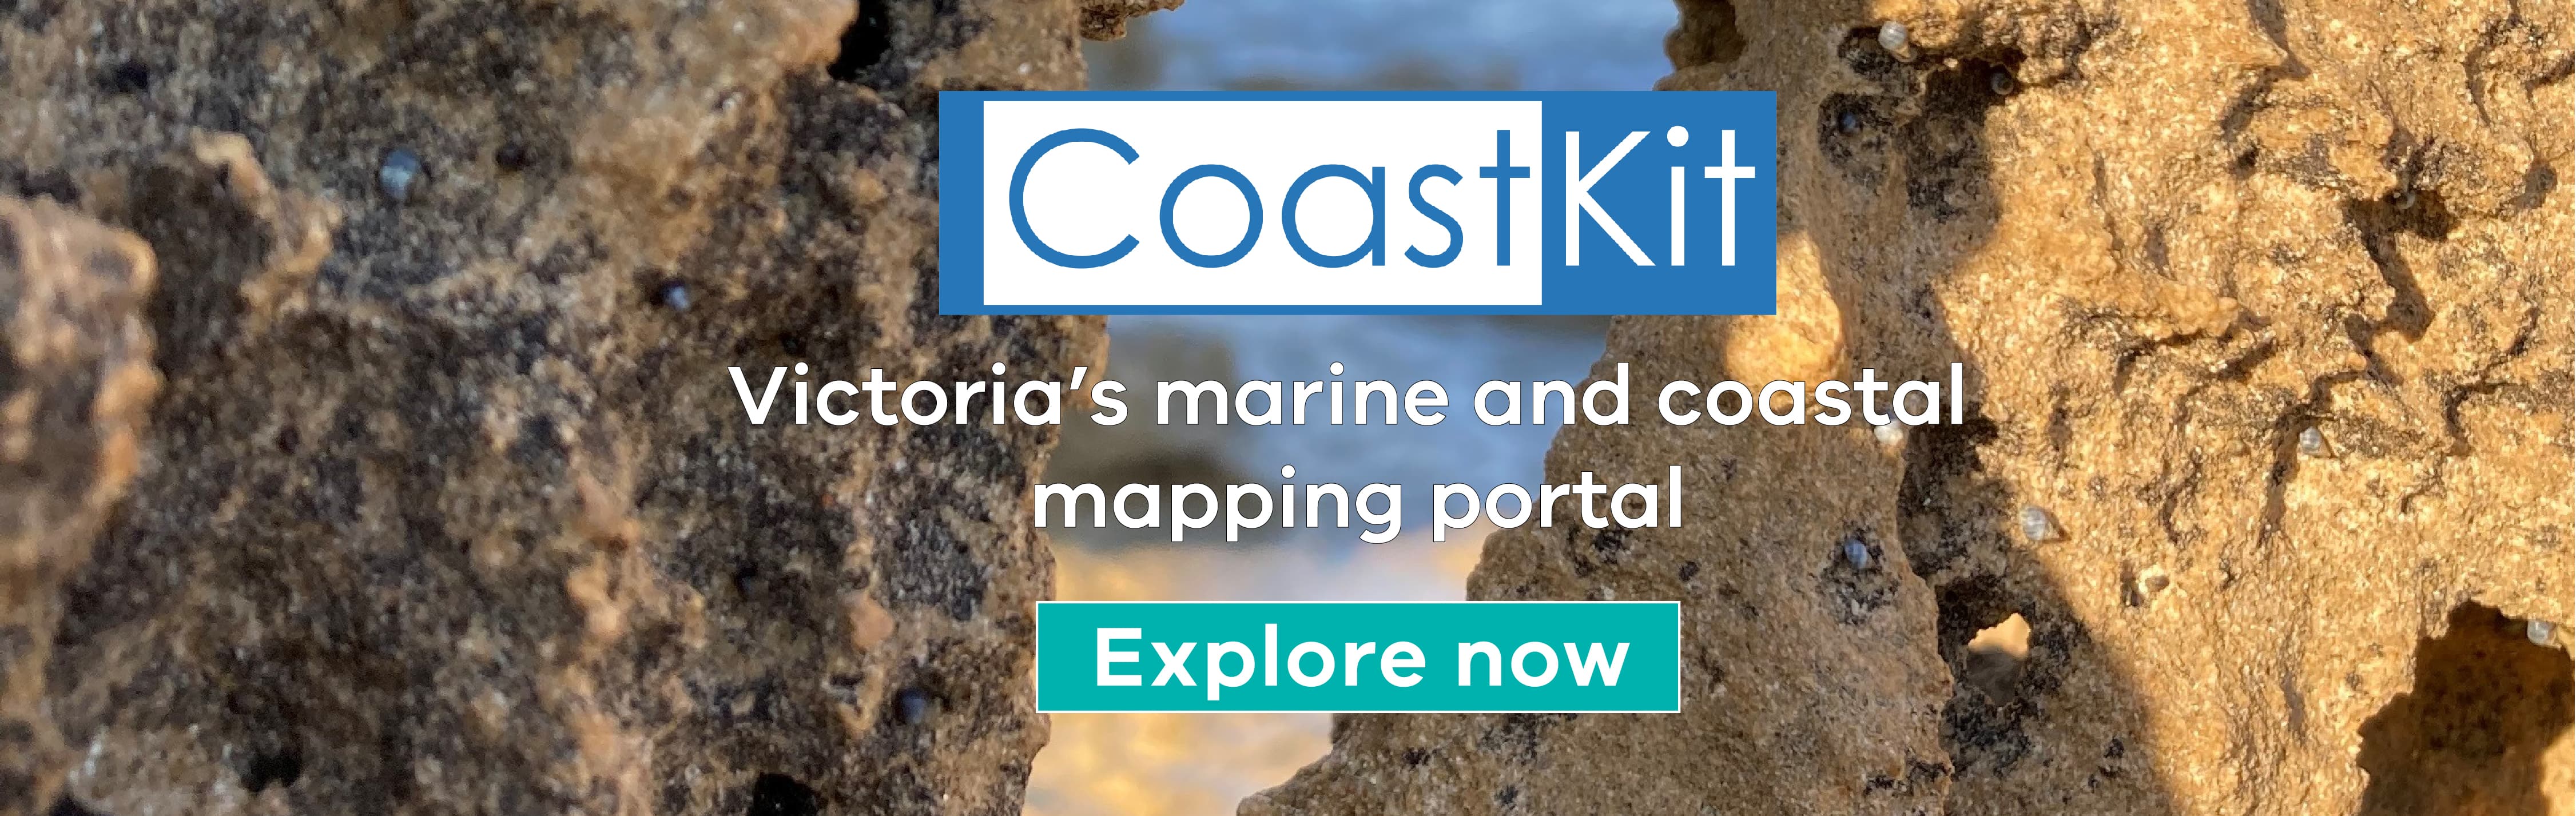 CoastKit banner saying explore now Victorias marine and coastal mapping portal